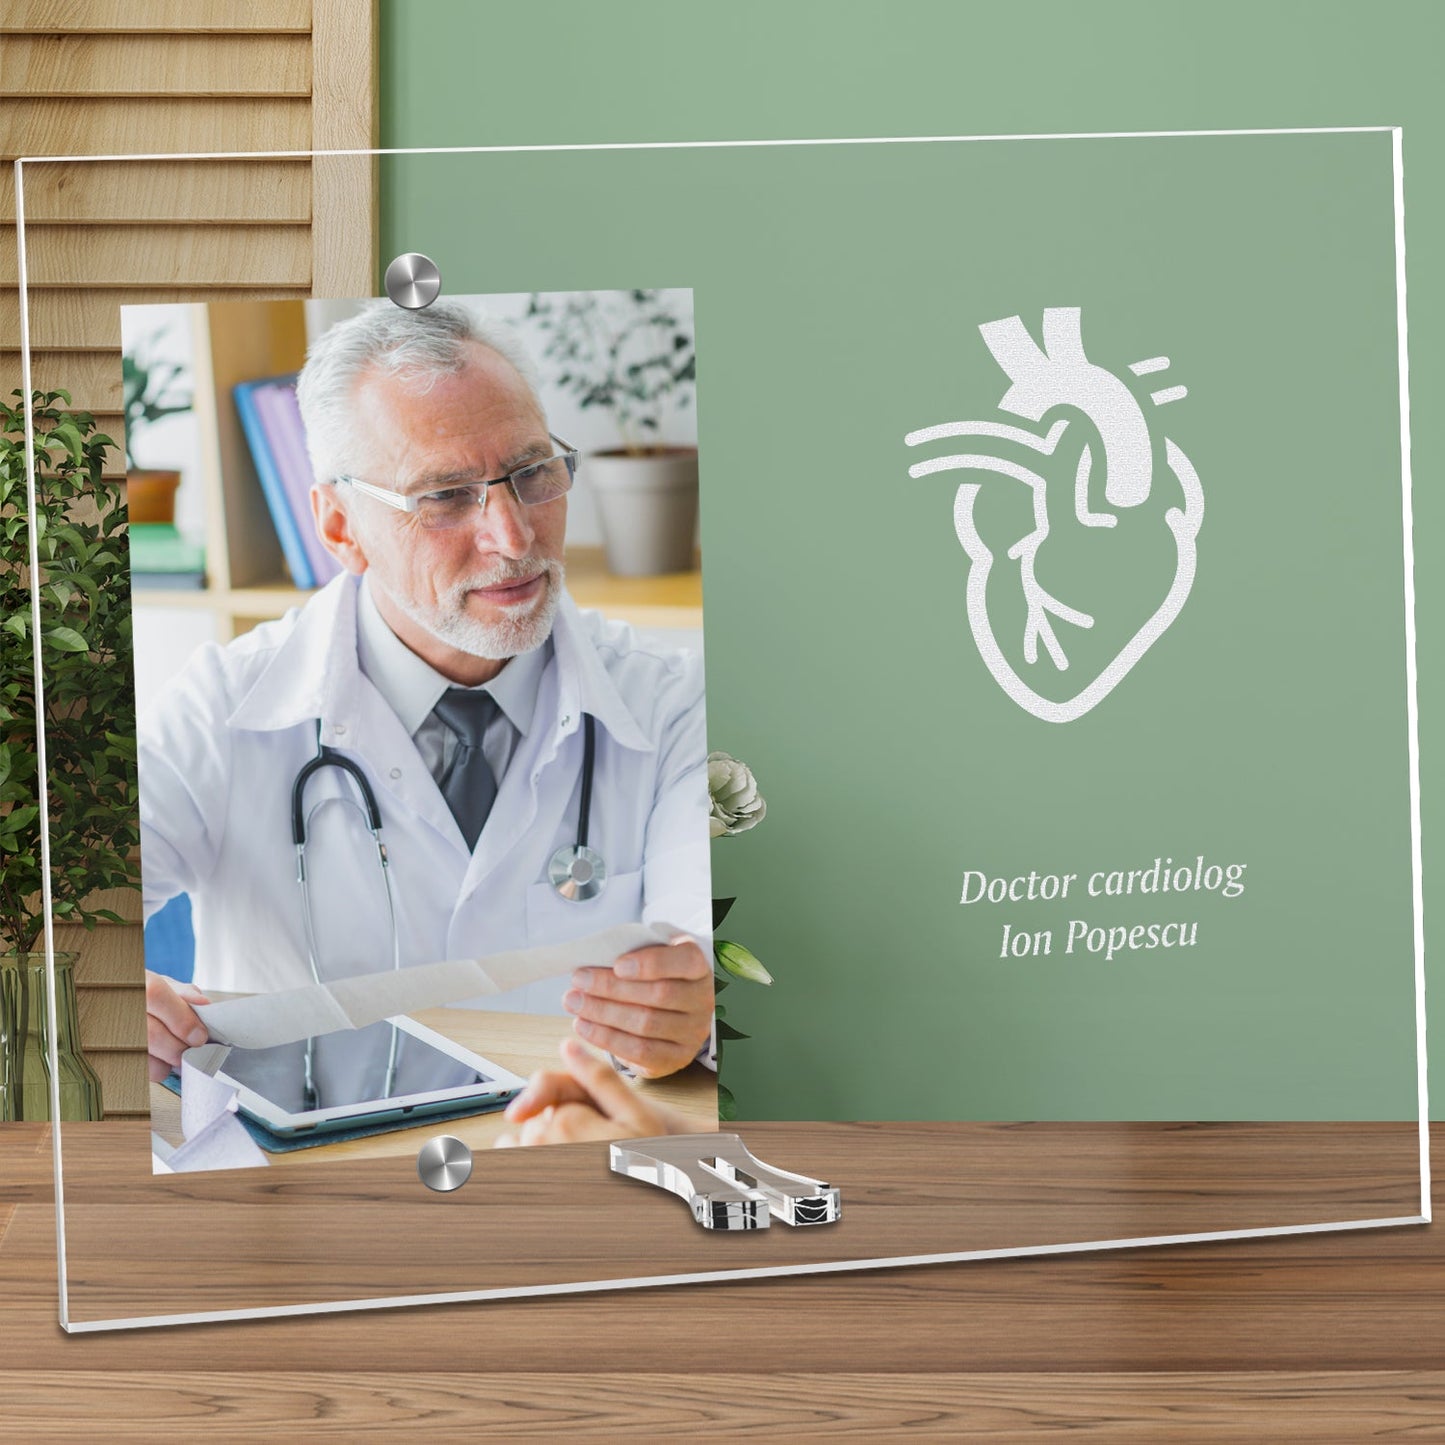 Cadou personalizat rama plexiglas - Doctor cardiolog - ghizbi.ro